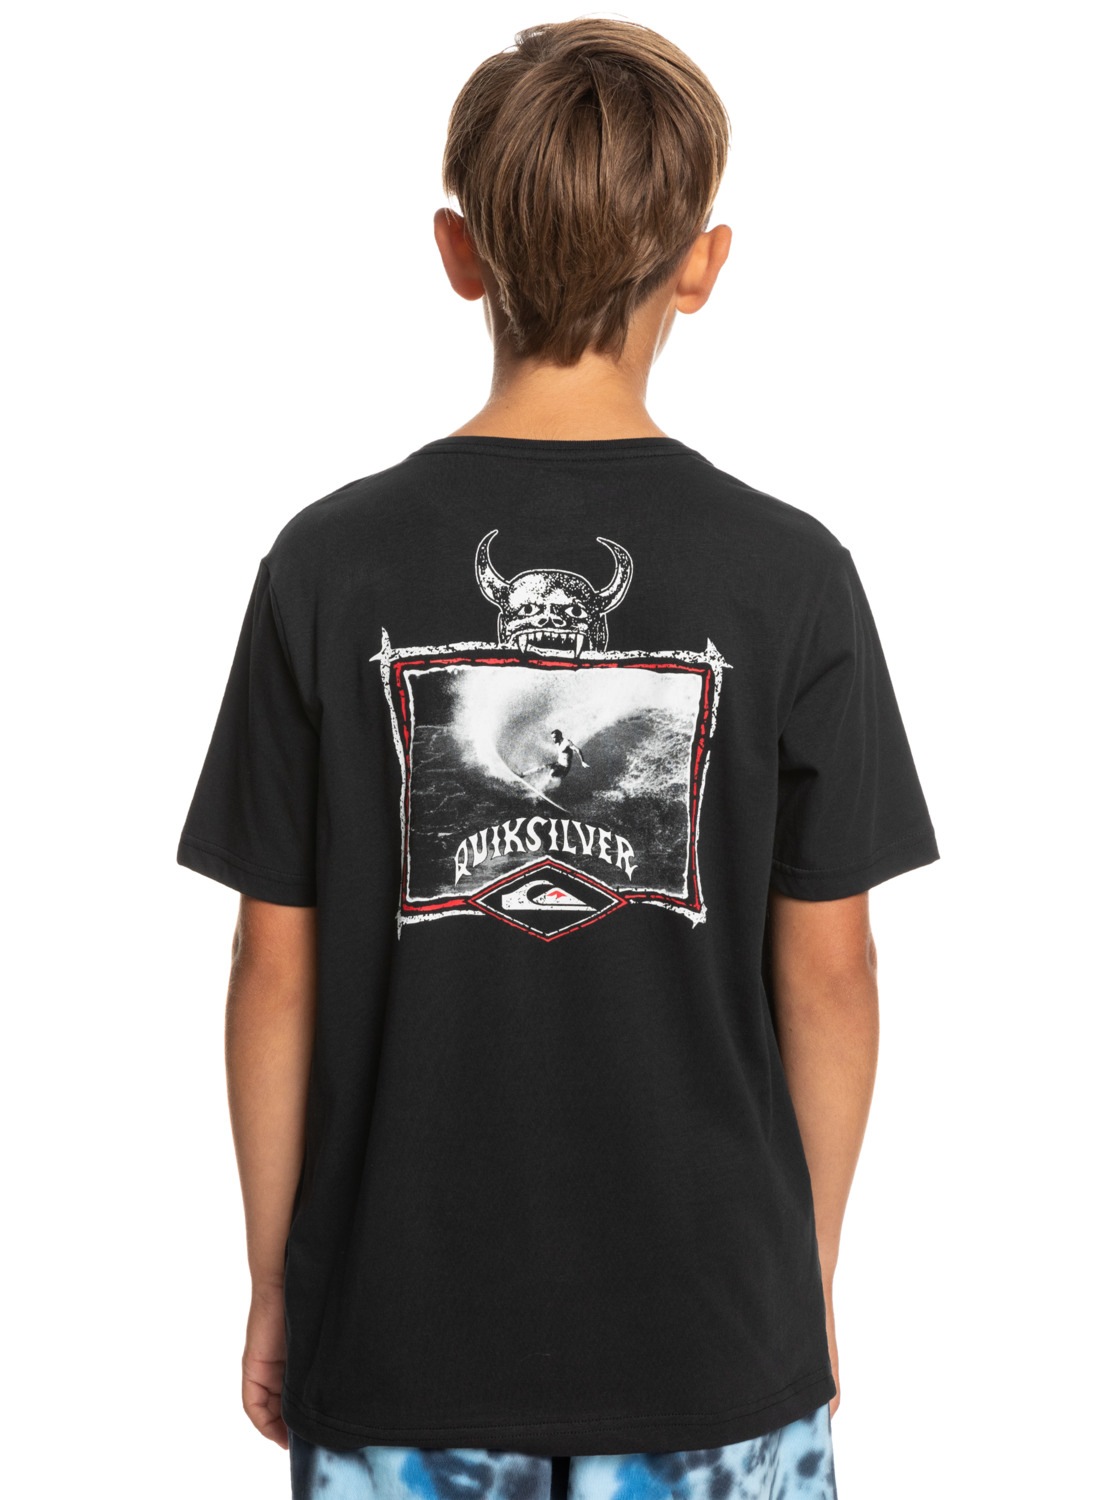 »Surfer T-Shirt Of Fortune« Quiksilver bestellen